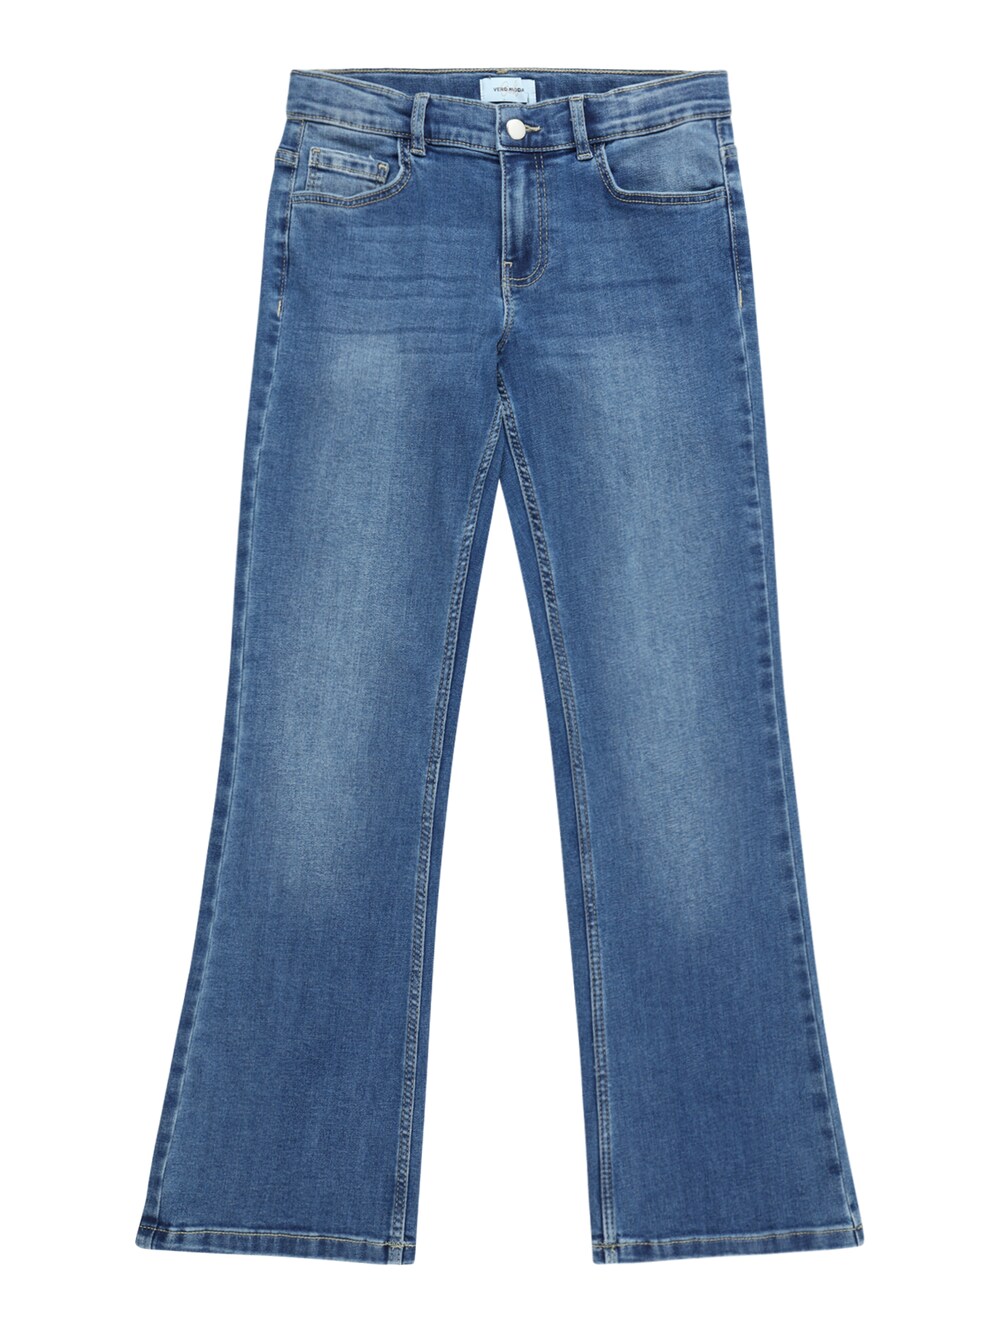 Широкие джинсы Vero Moda Girl River, синий рубашка geschnitten kragen ärmelbündchen mit knopf vero moda светло синий